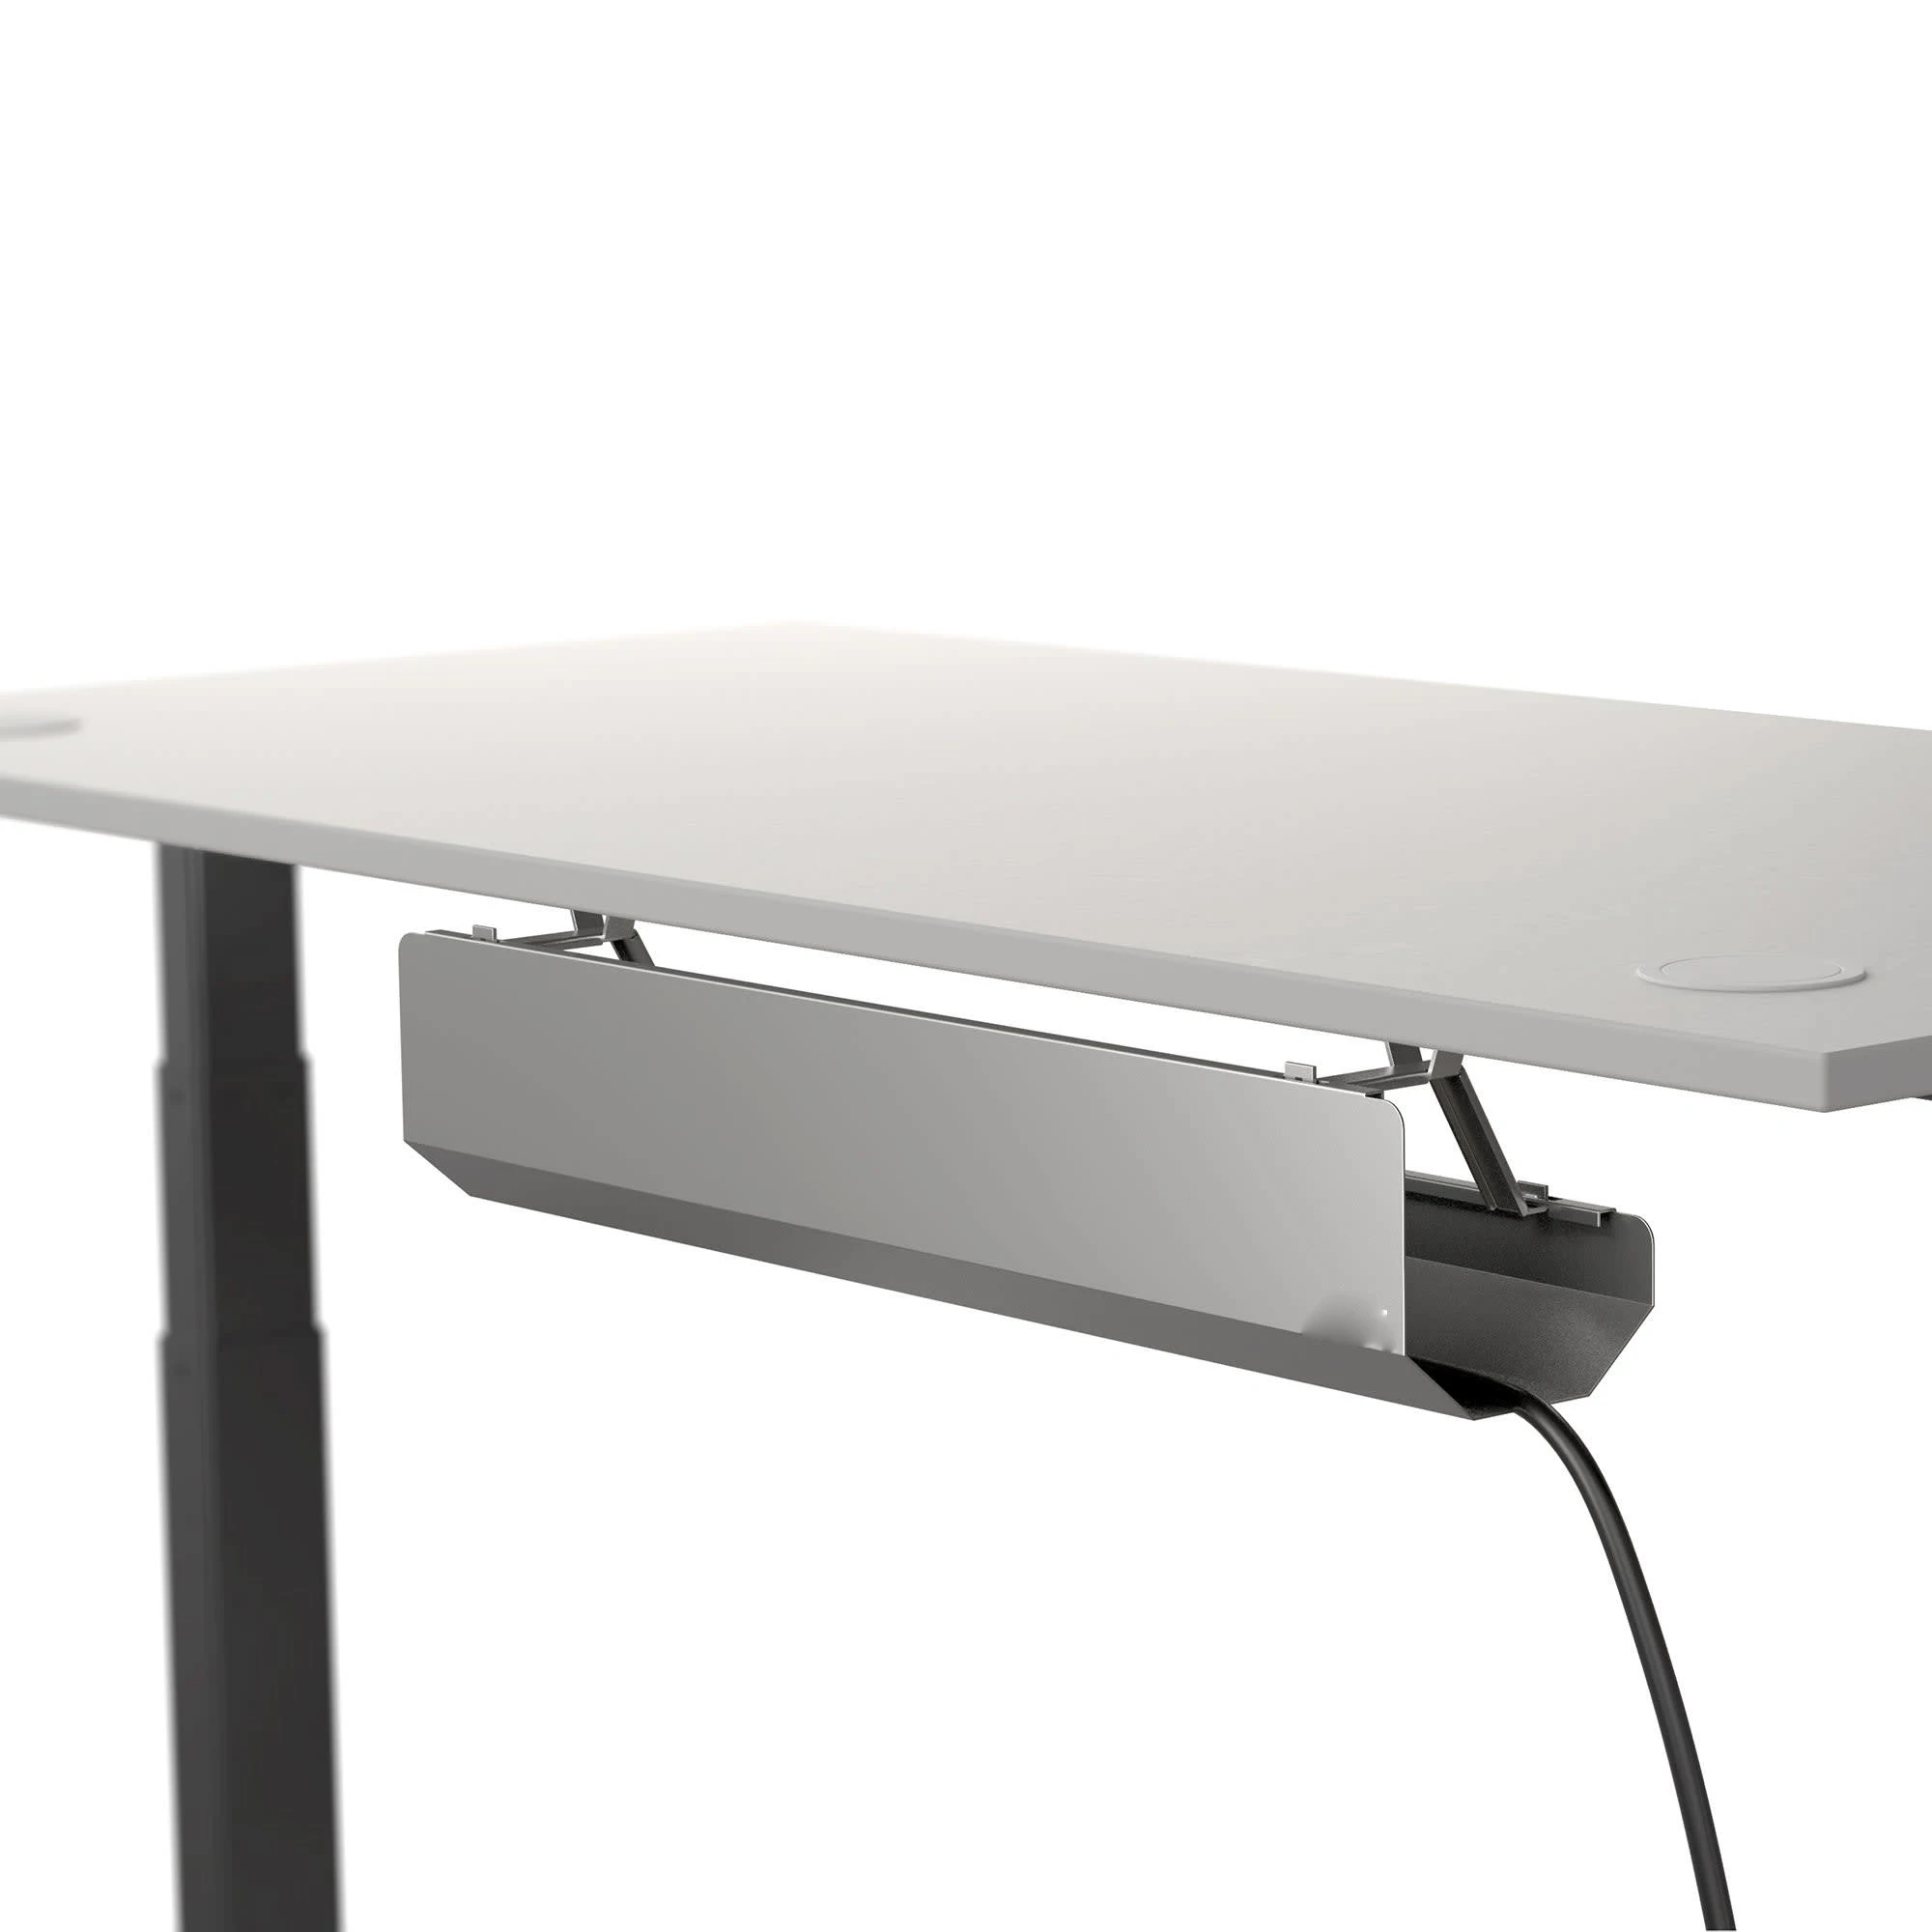 Экранный стол. Under Desk Cable Management Tray. Кабельный органайзер для стола. Кабельный органайзер для офисного стола. Кабельный лоток для стола.